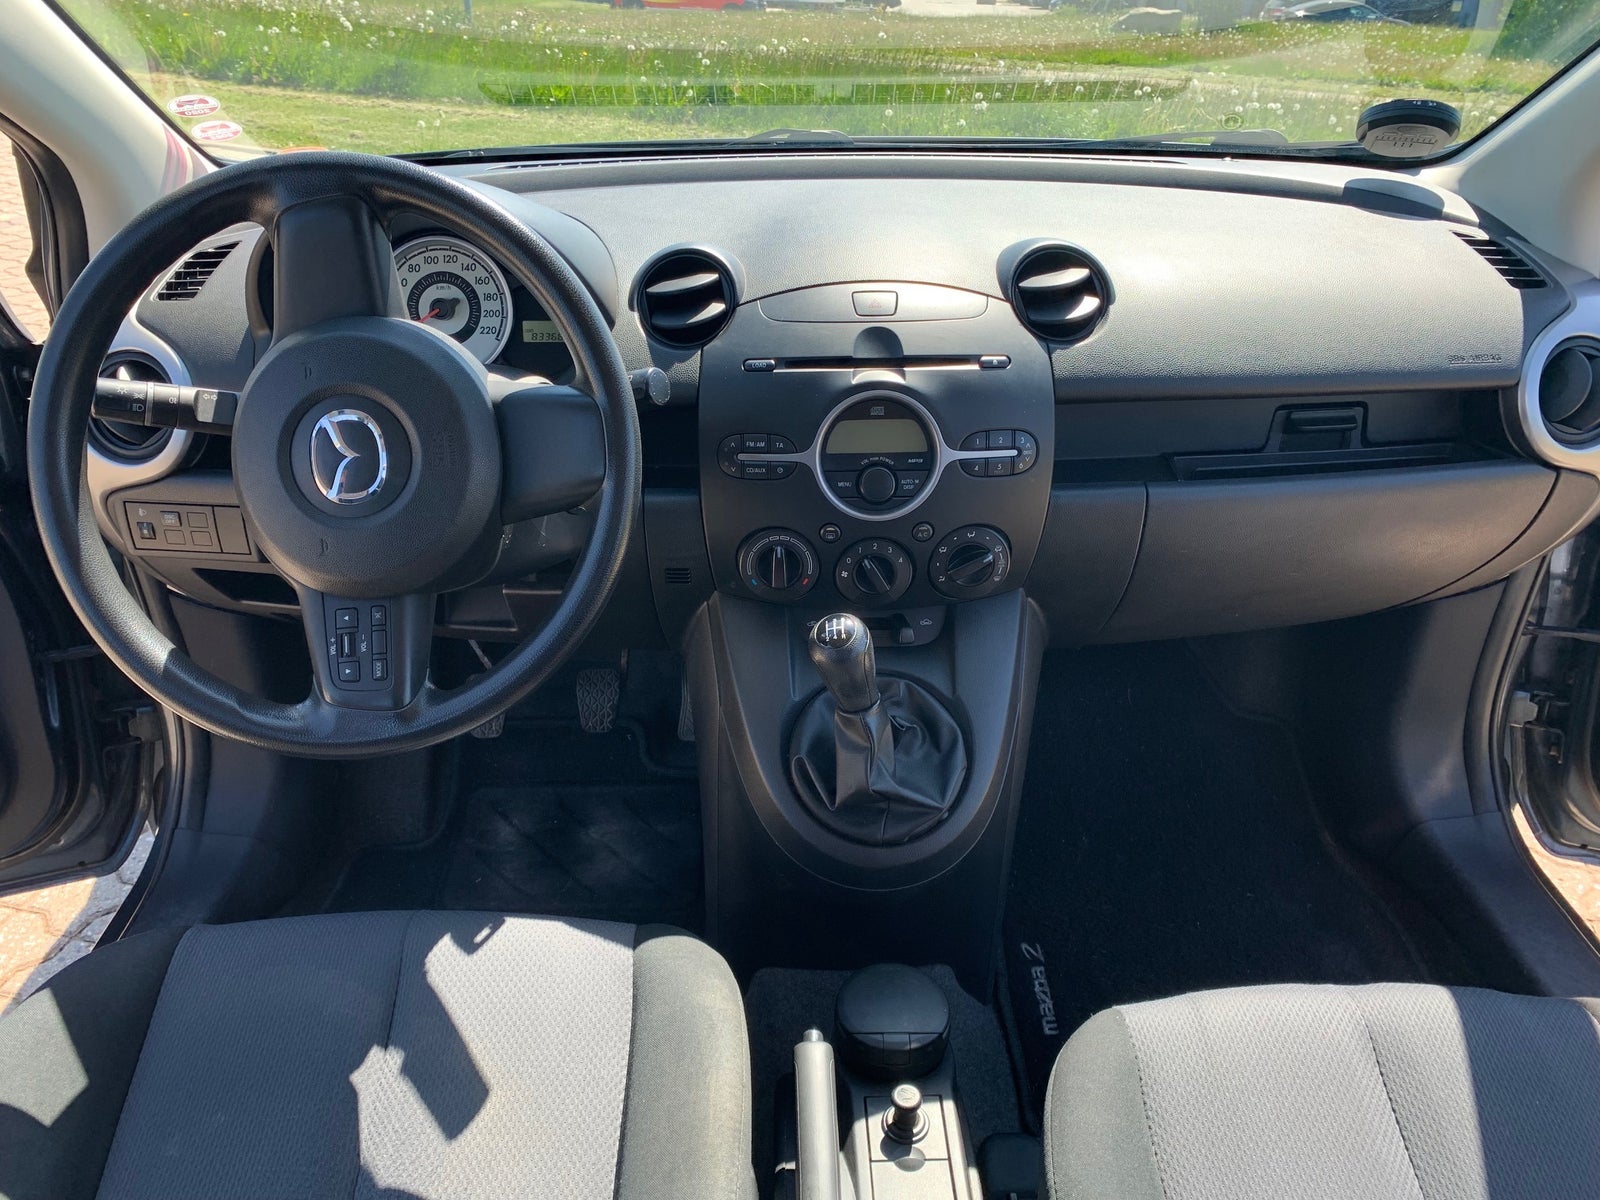 Mazda 2 1,3 Benzin modelår 2009 km 83000 Blåmetal ABS airbag